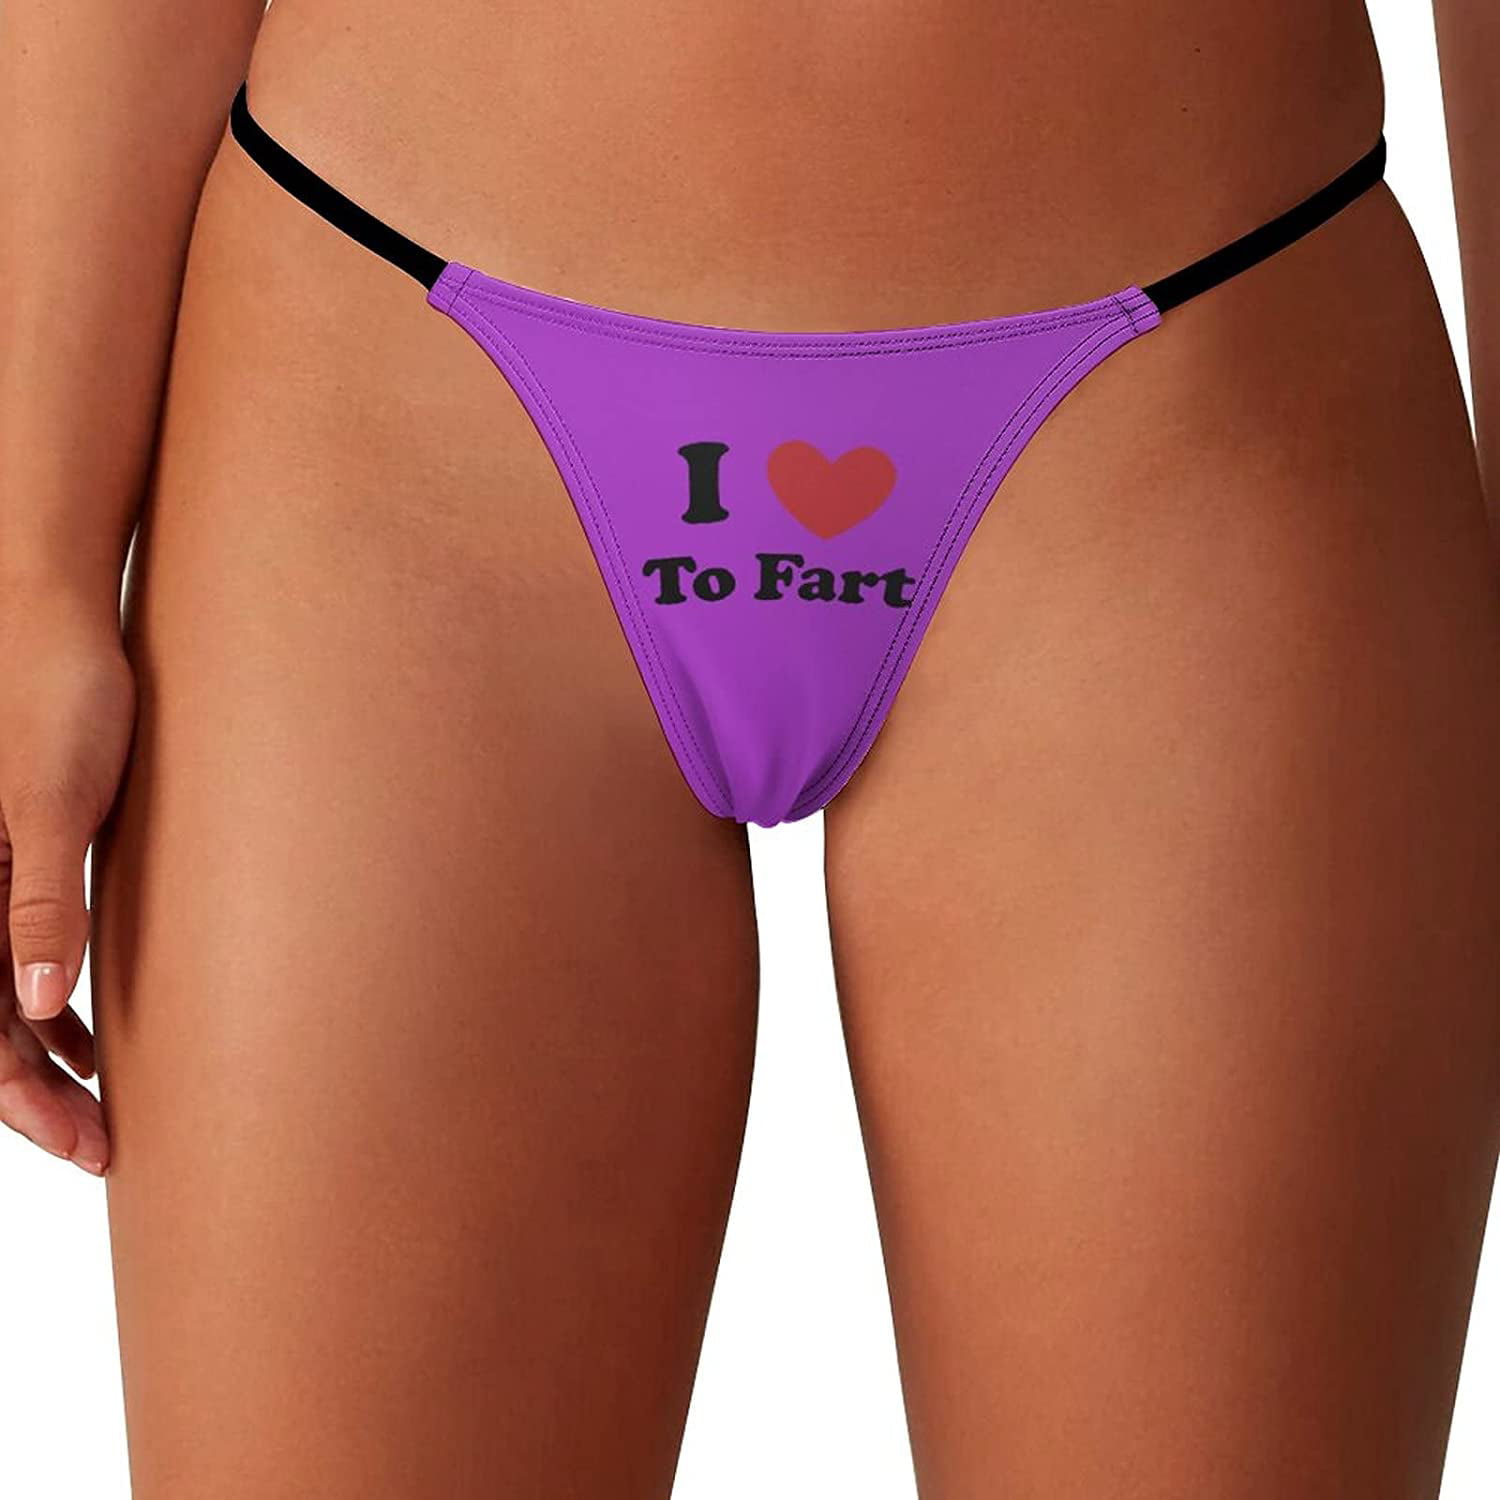 debbi kidd add women farting in panties photo